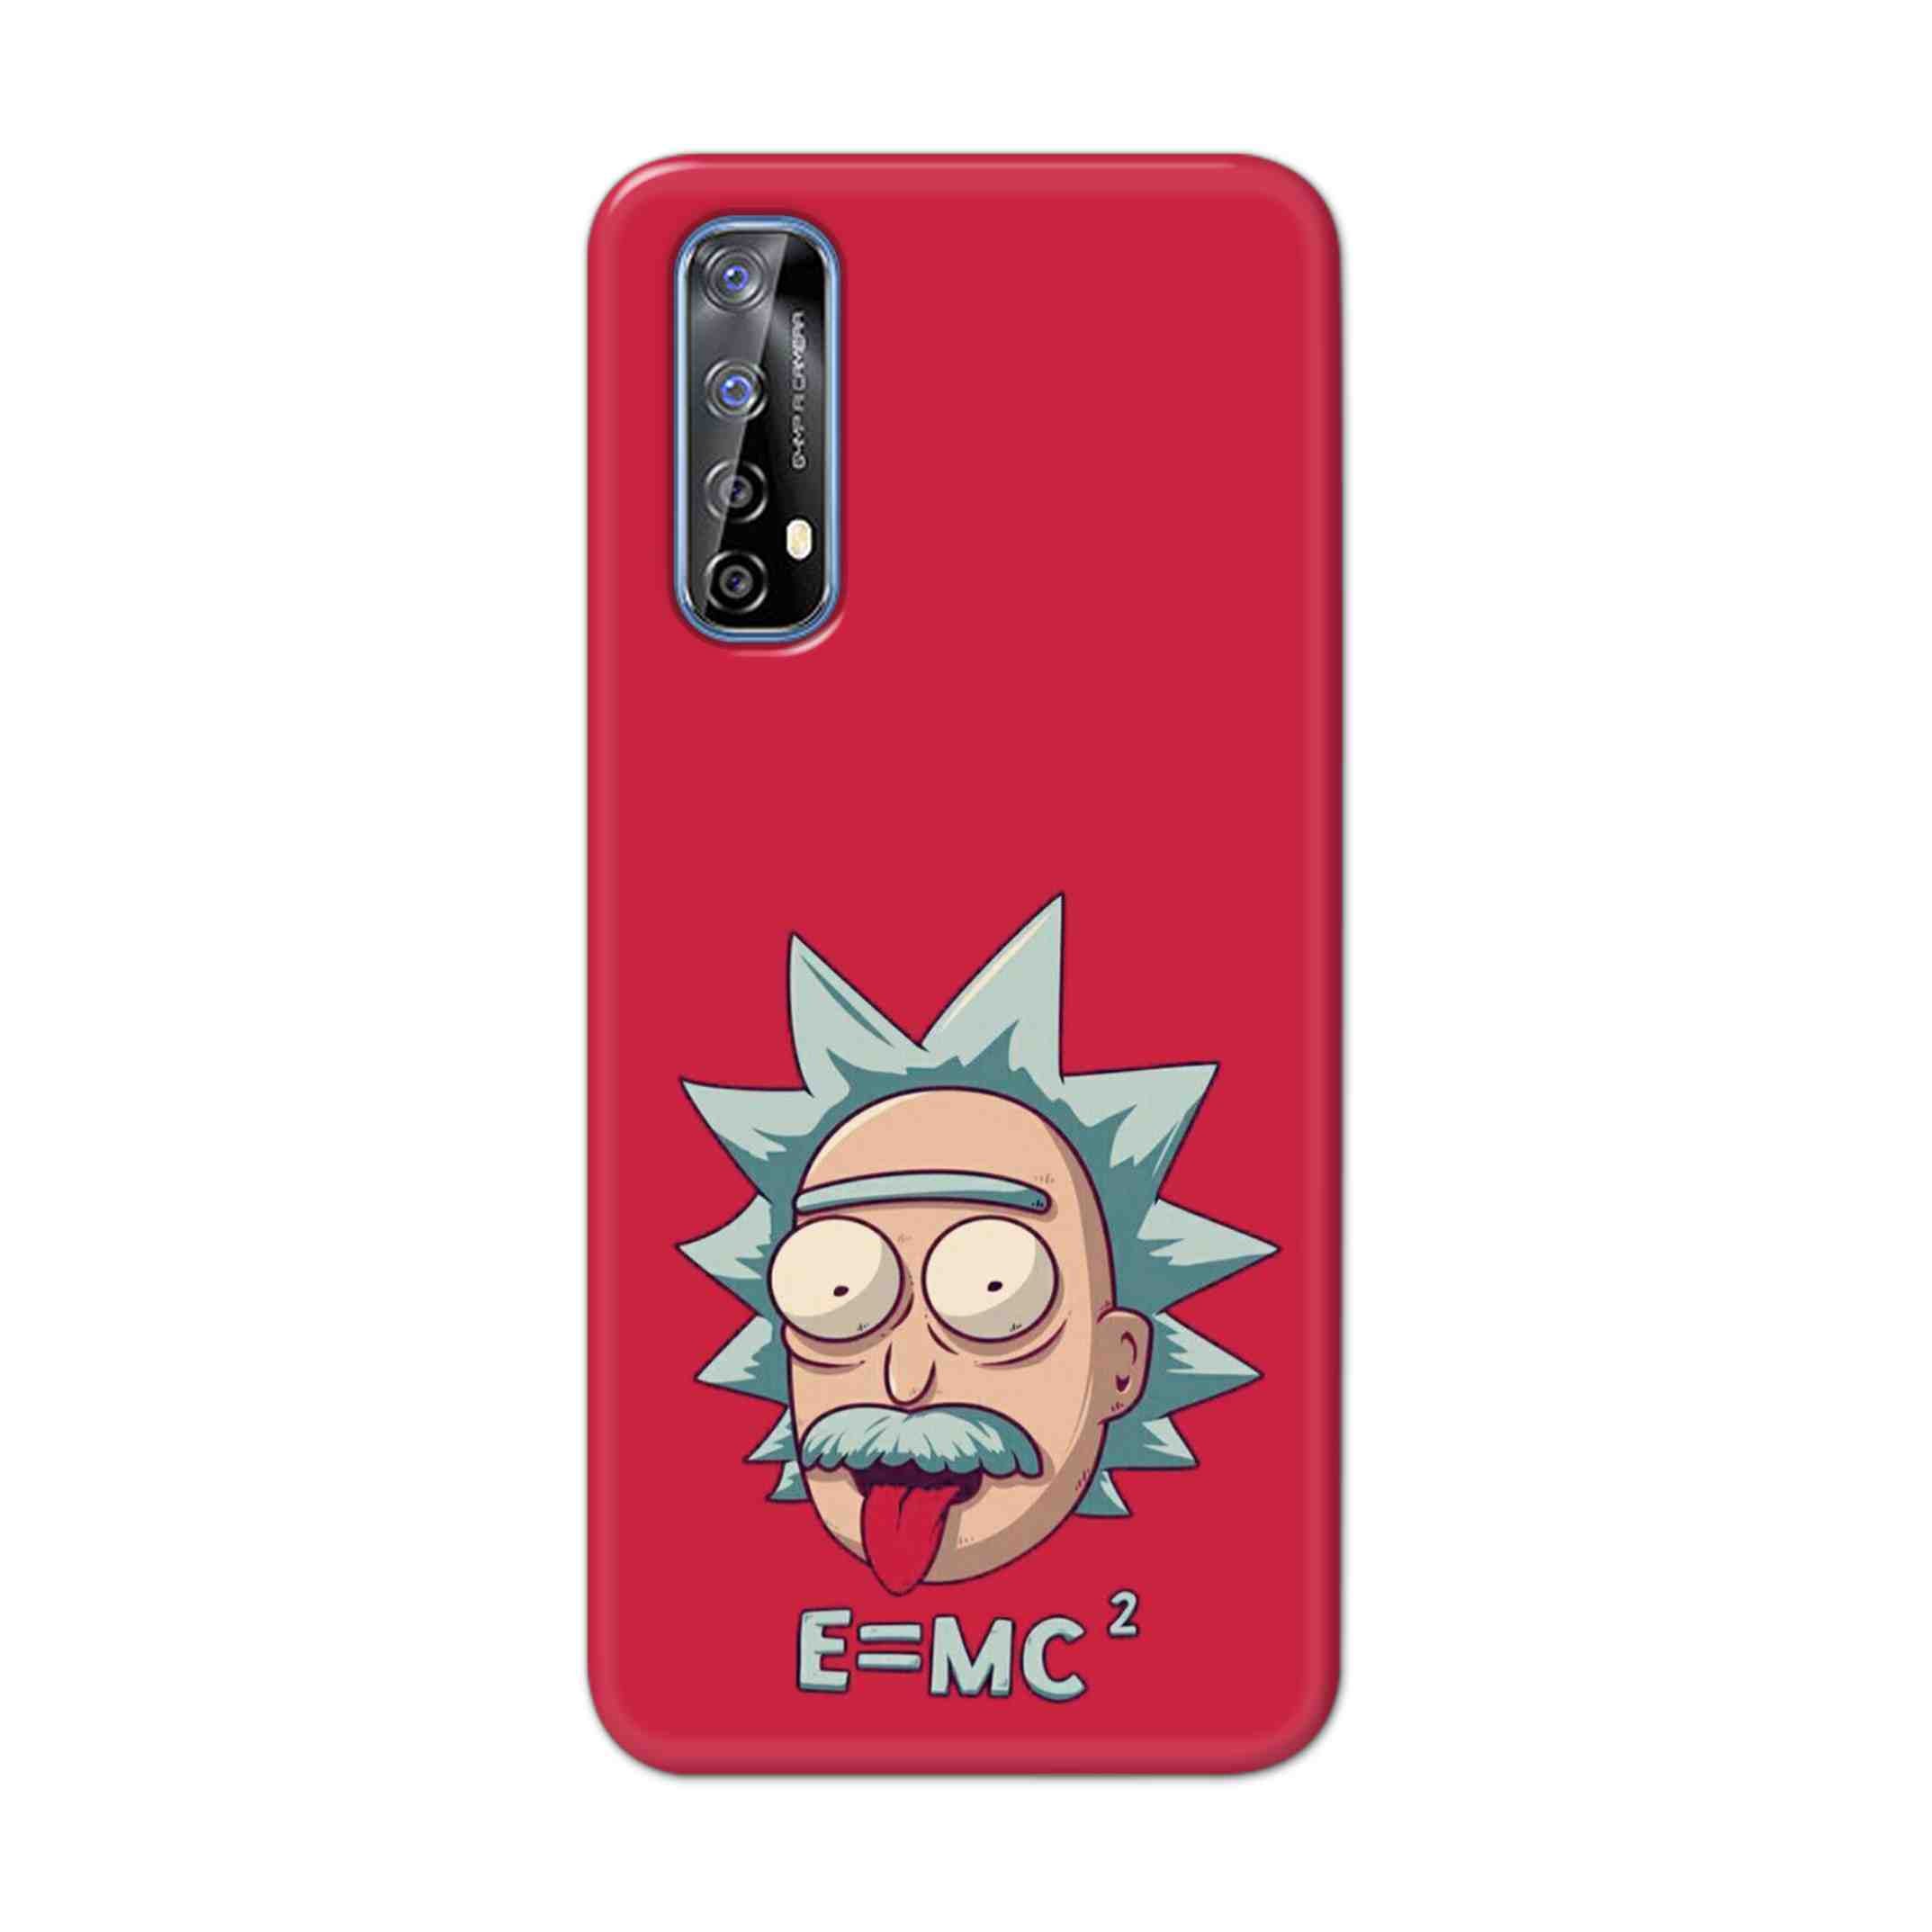 Buy E=Mc Hard Back Mobile Phone Case Cover For Realme 7 Online